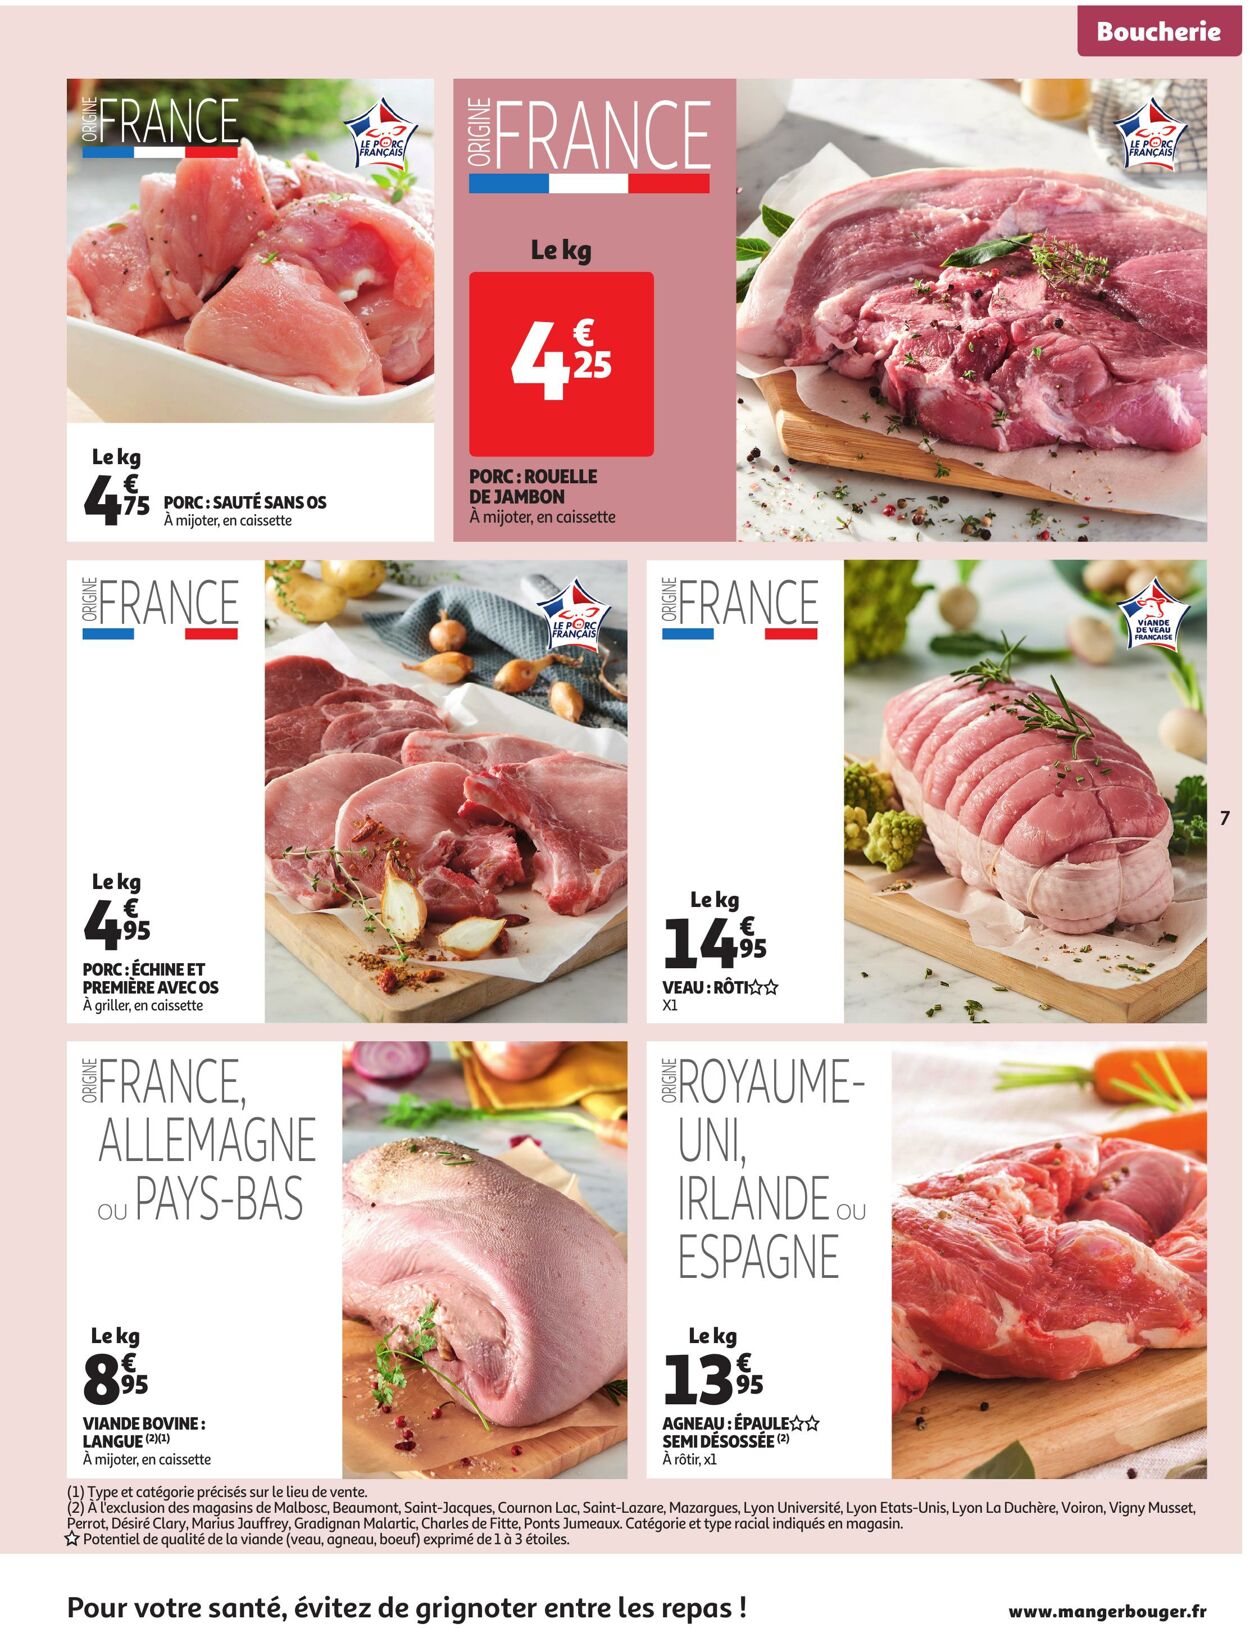 Catalogue Auchan 03.01.2023 - 08.01.2023